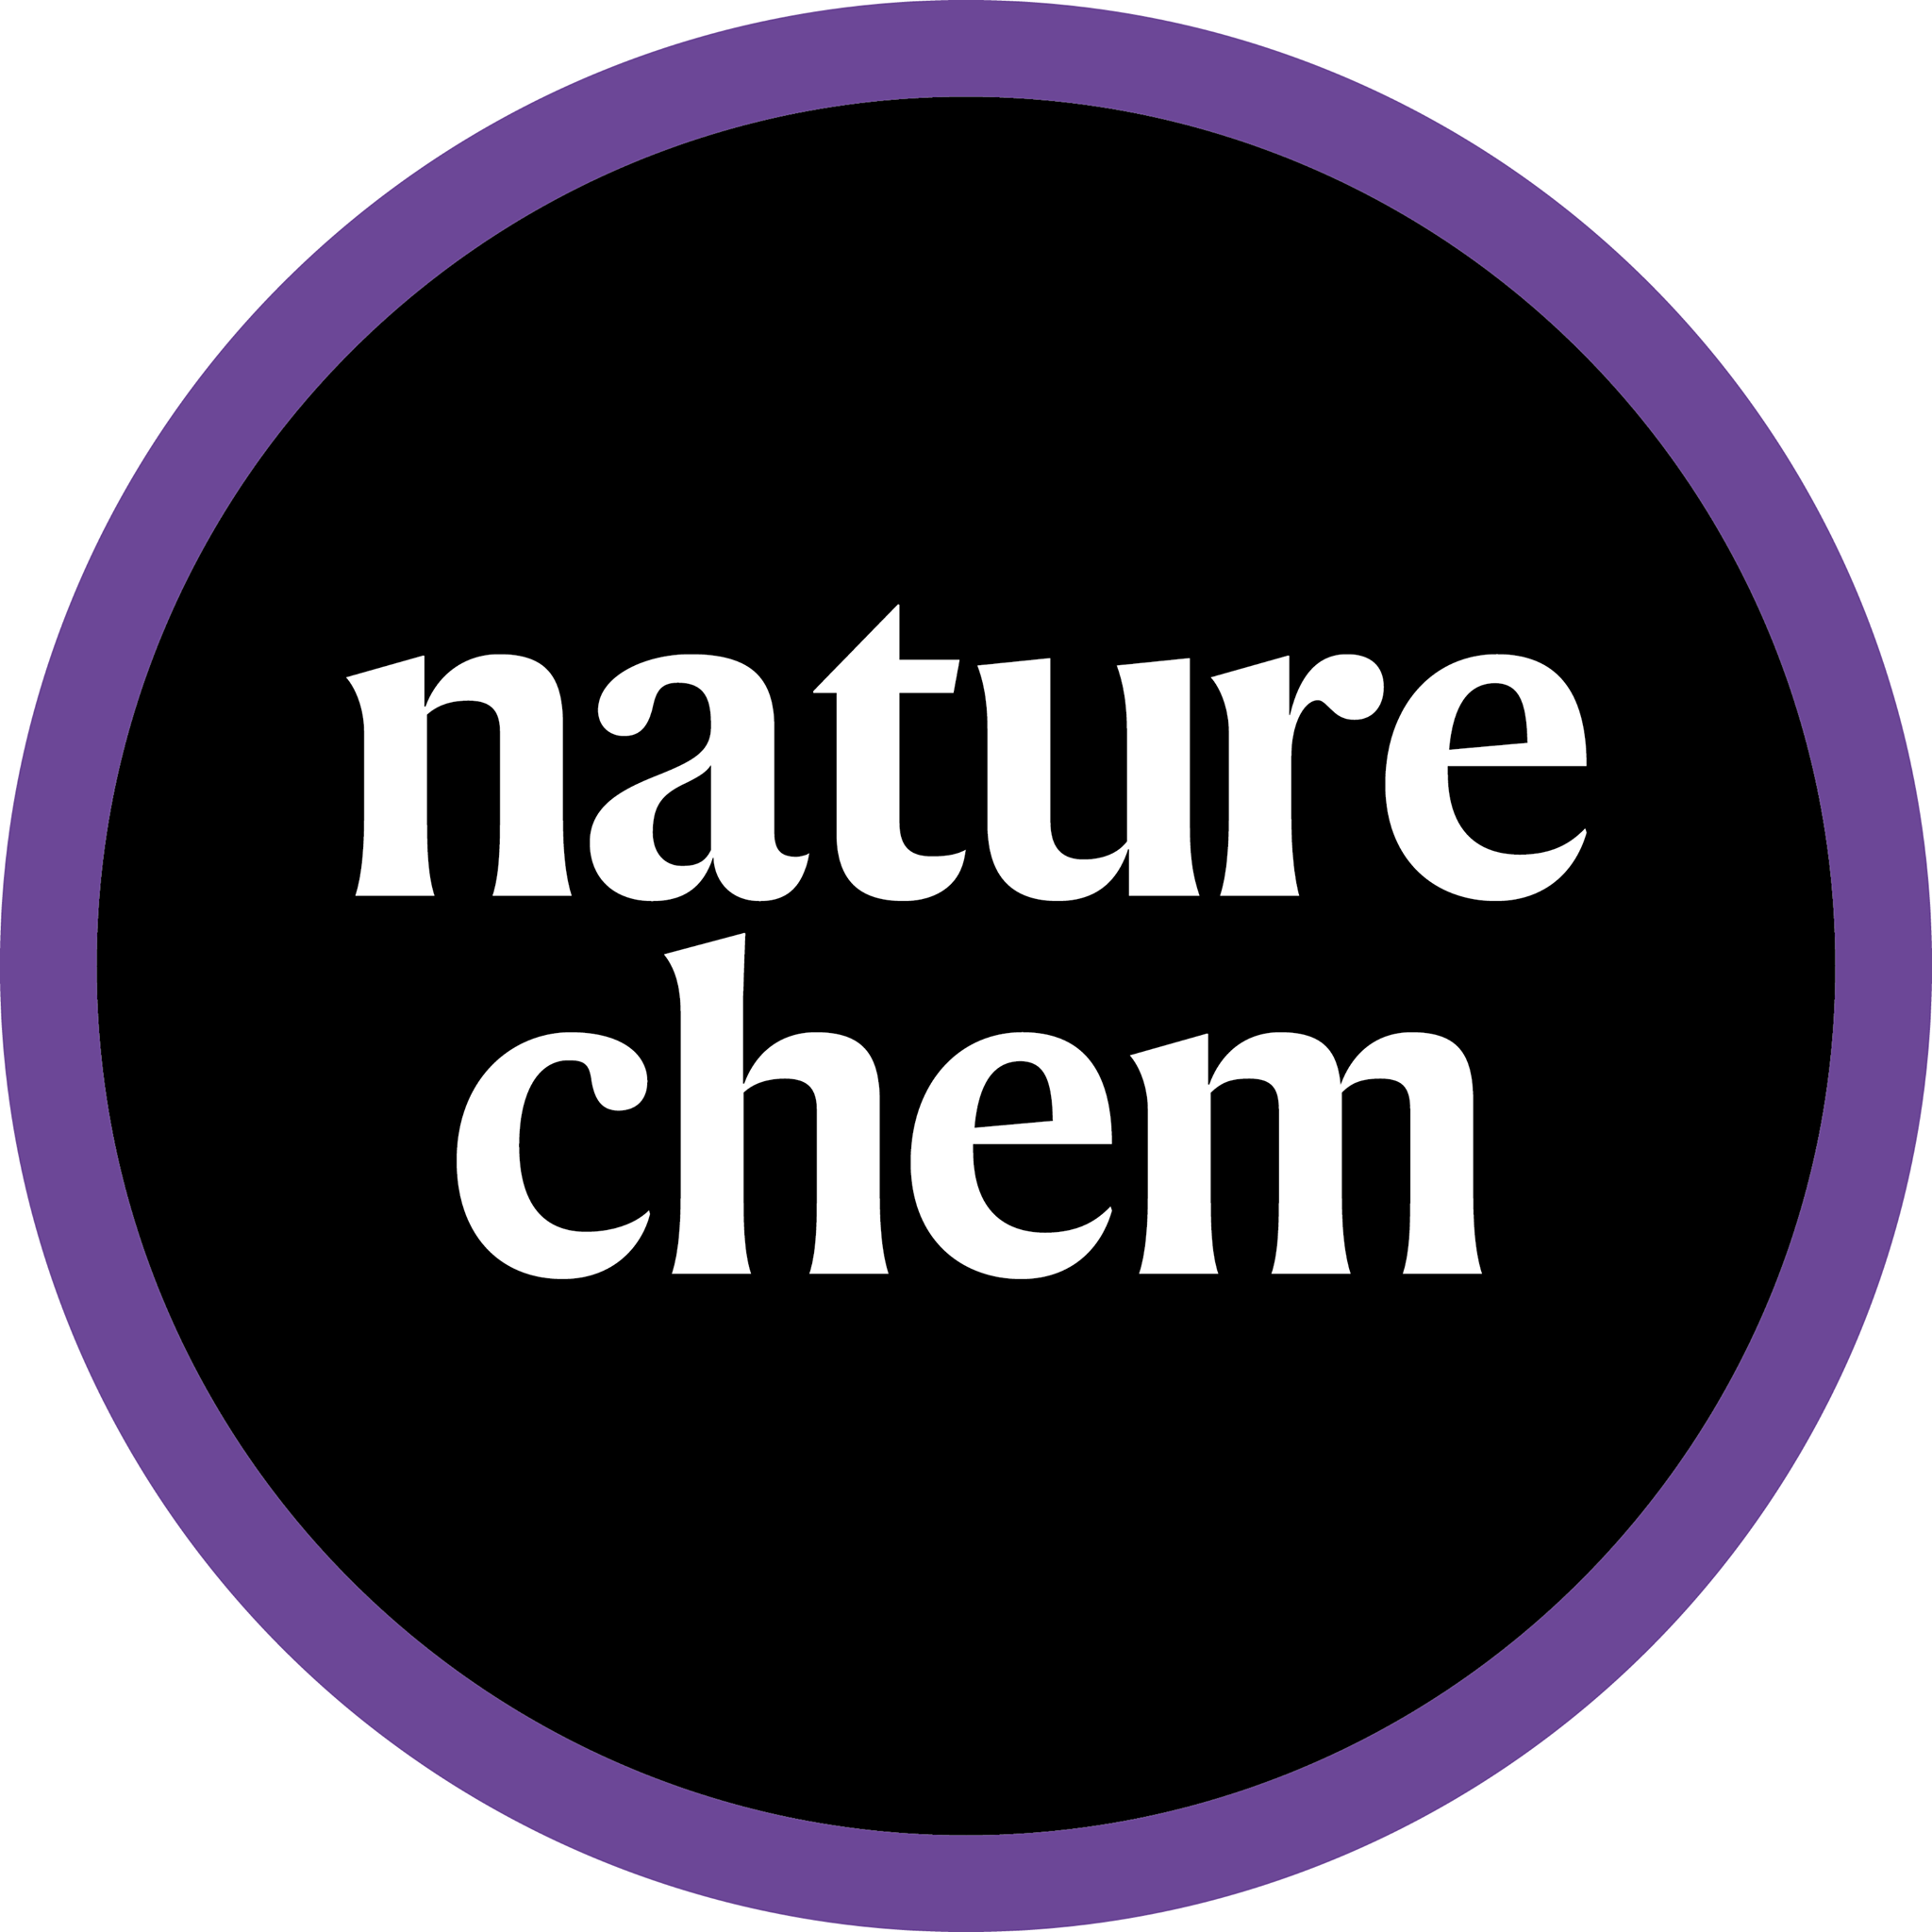 Nature Chemistry